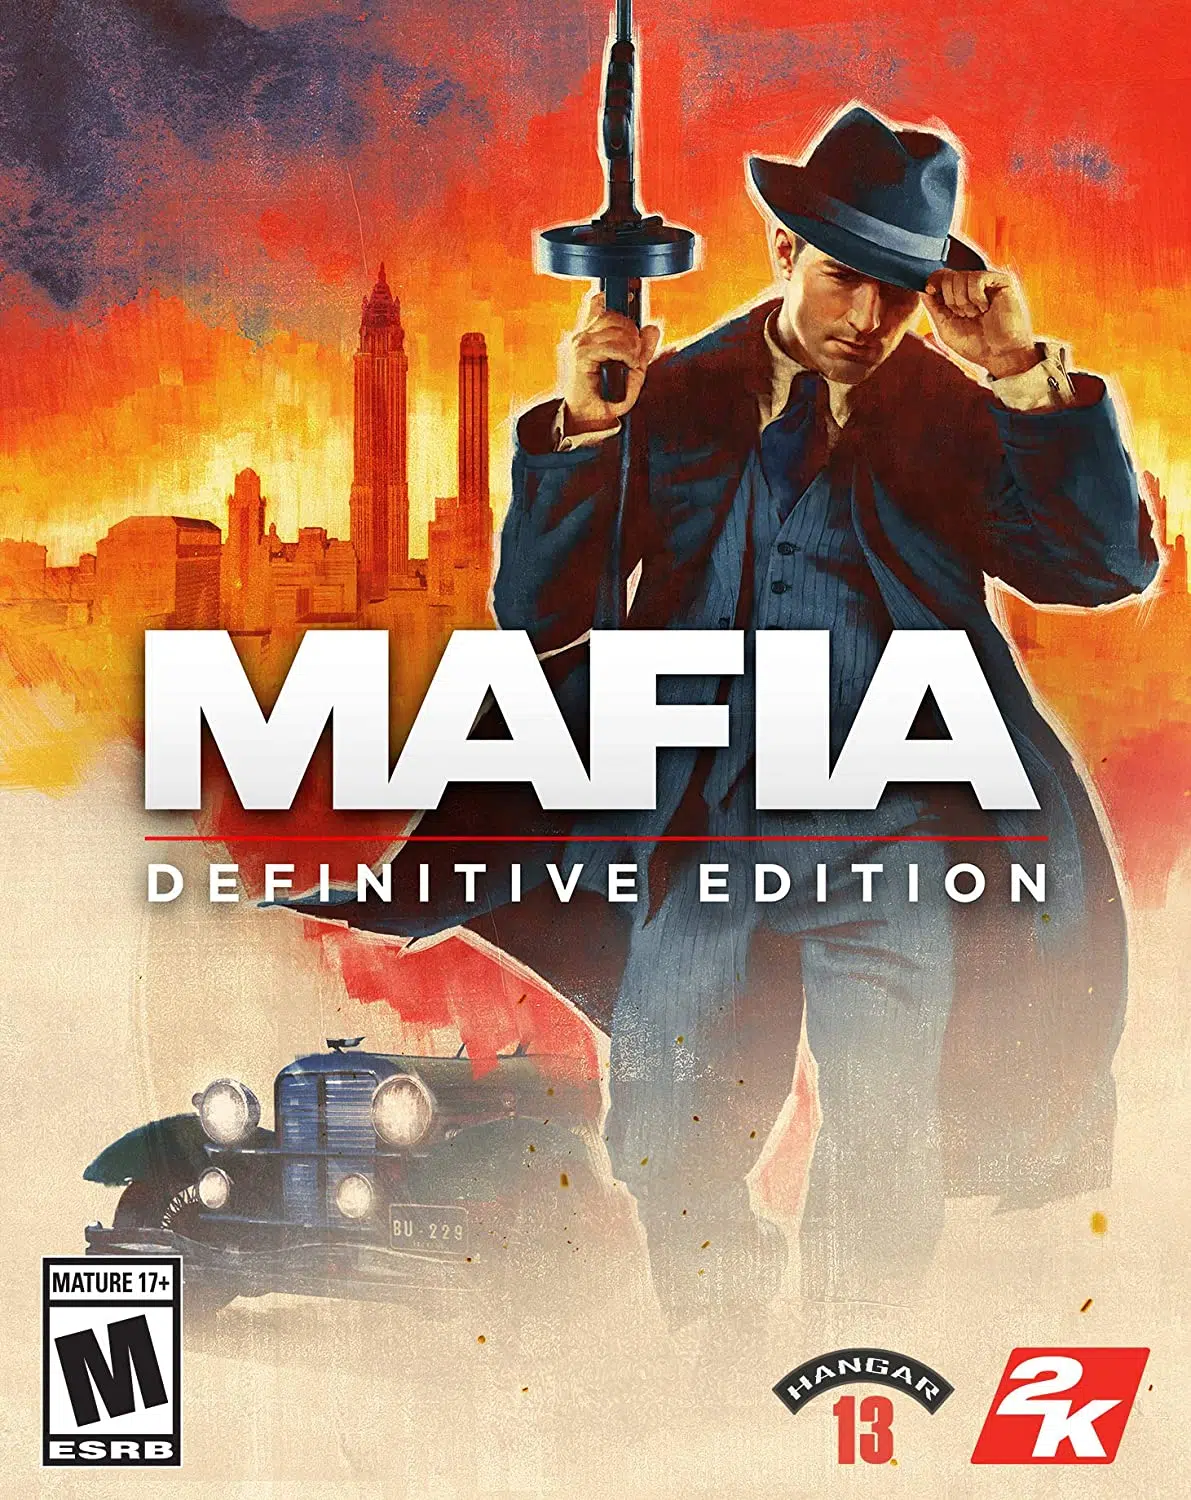 Mafia ARG Definitive Edition (AR) (Xbox One / Xbox Series X|S) - Xbox Live - Digital Code